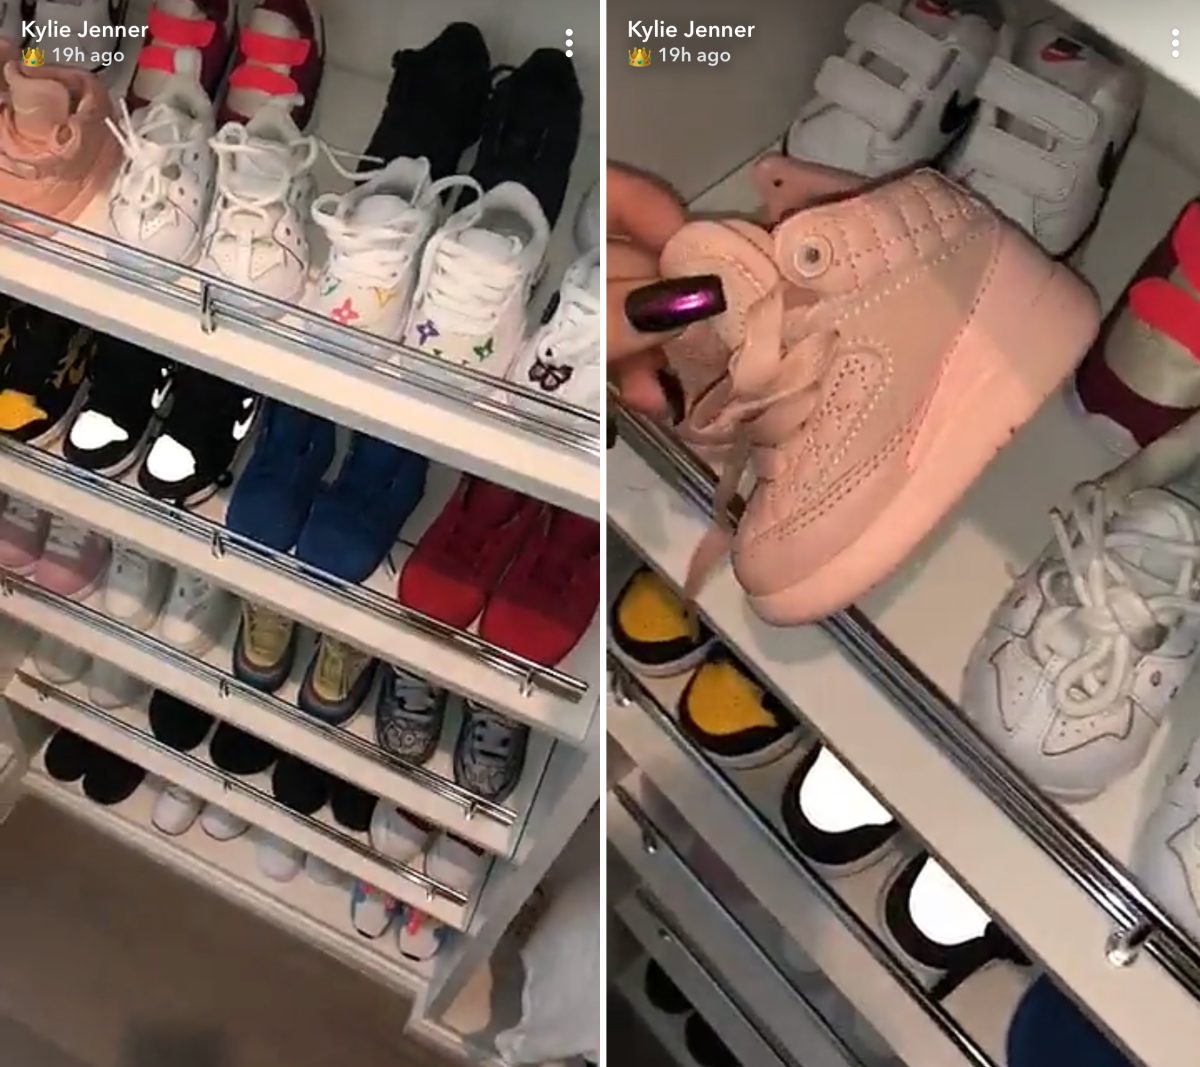 Kylie's shoe closet // Via Snapchat #KylieJennerHouse